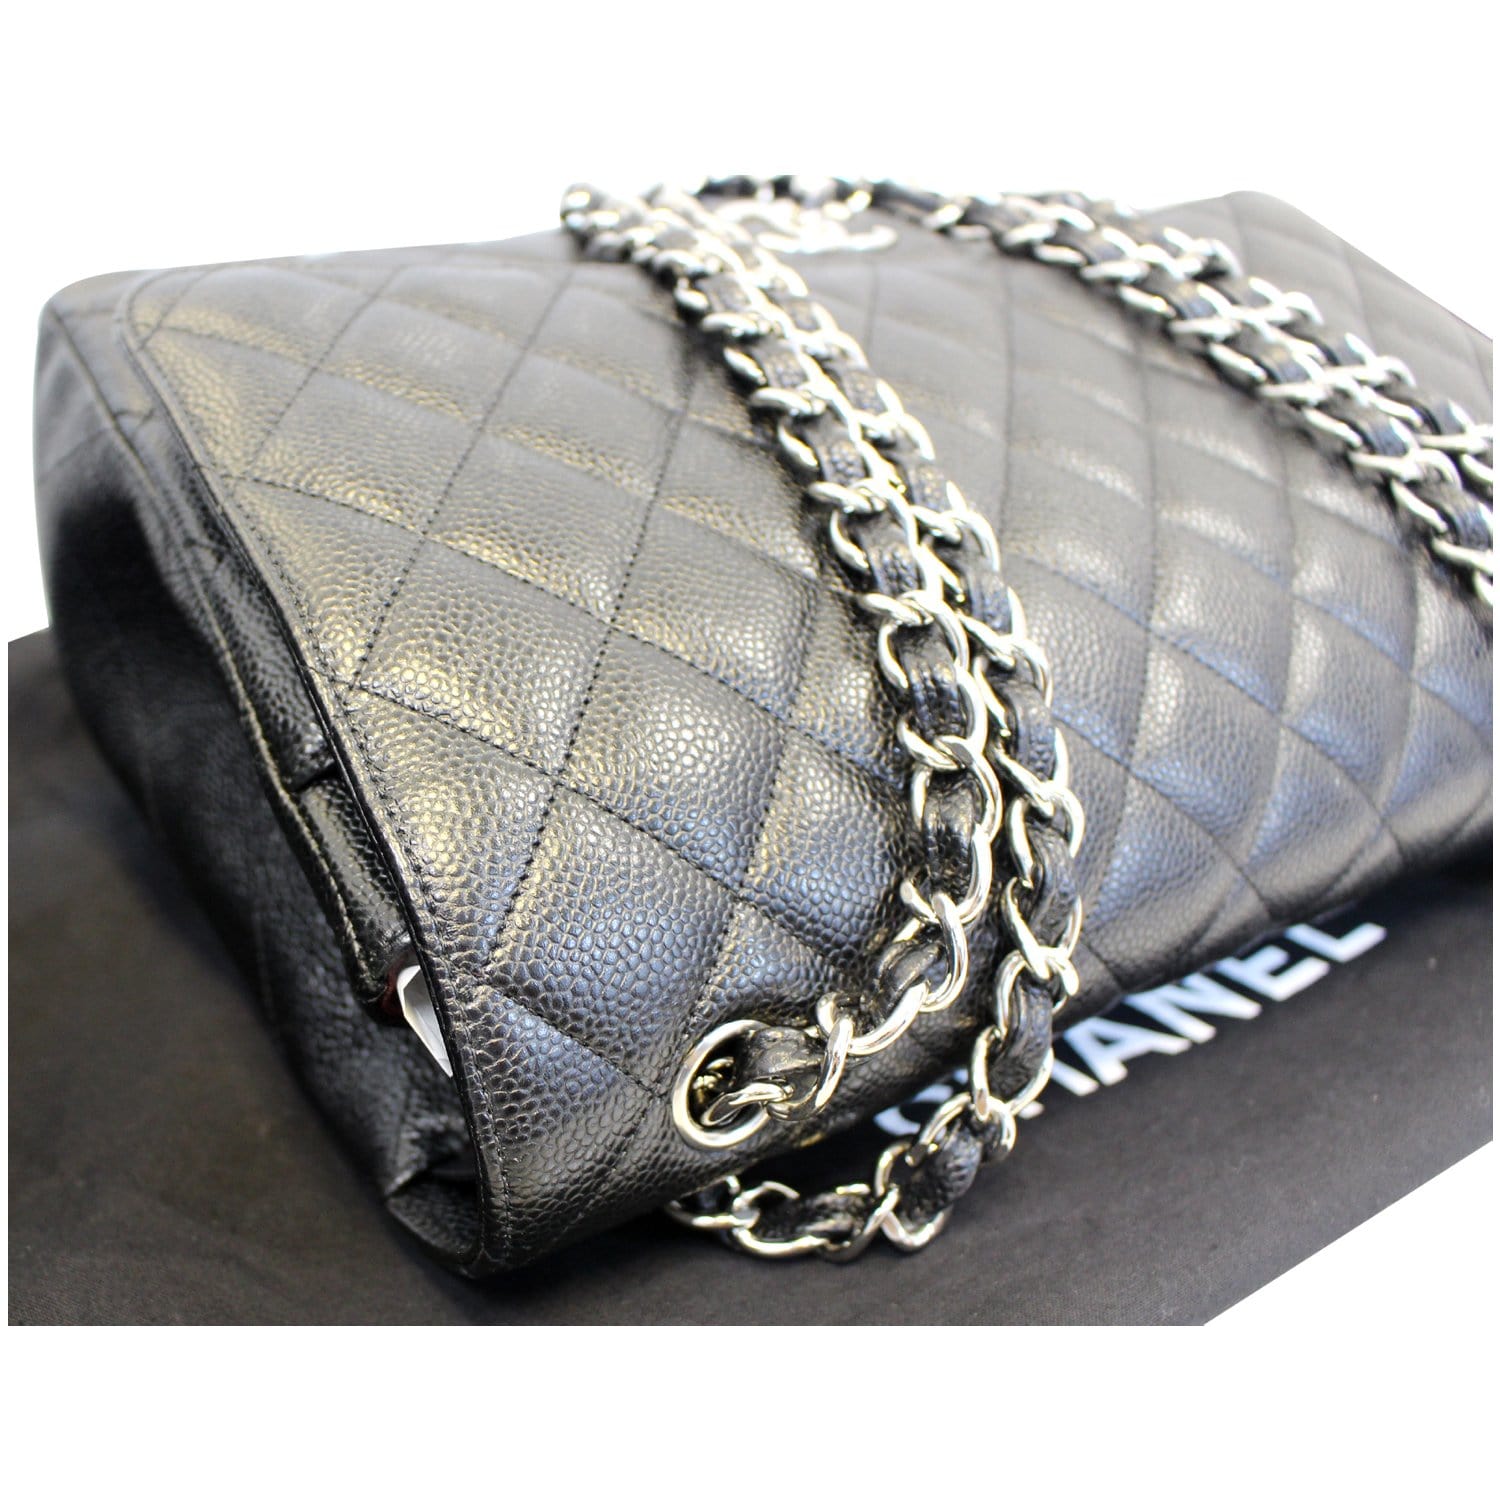 CHANEL Maxi Caviar Leather Jumbo Double Flap Shoulder Bag Black-US